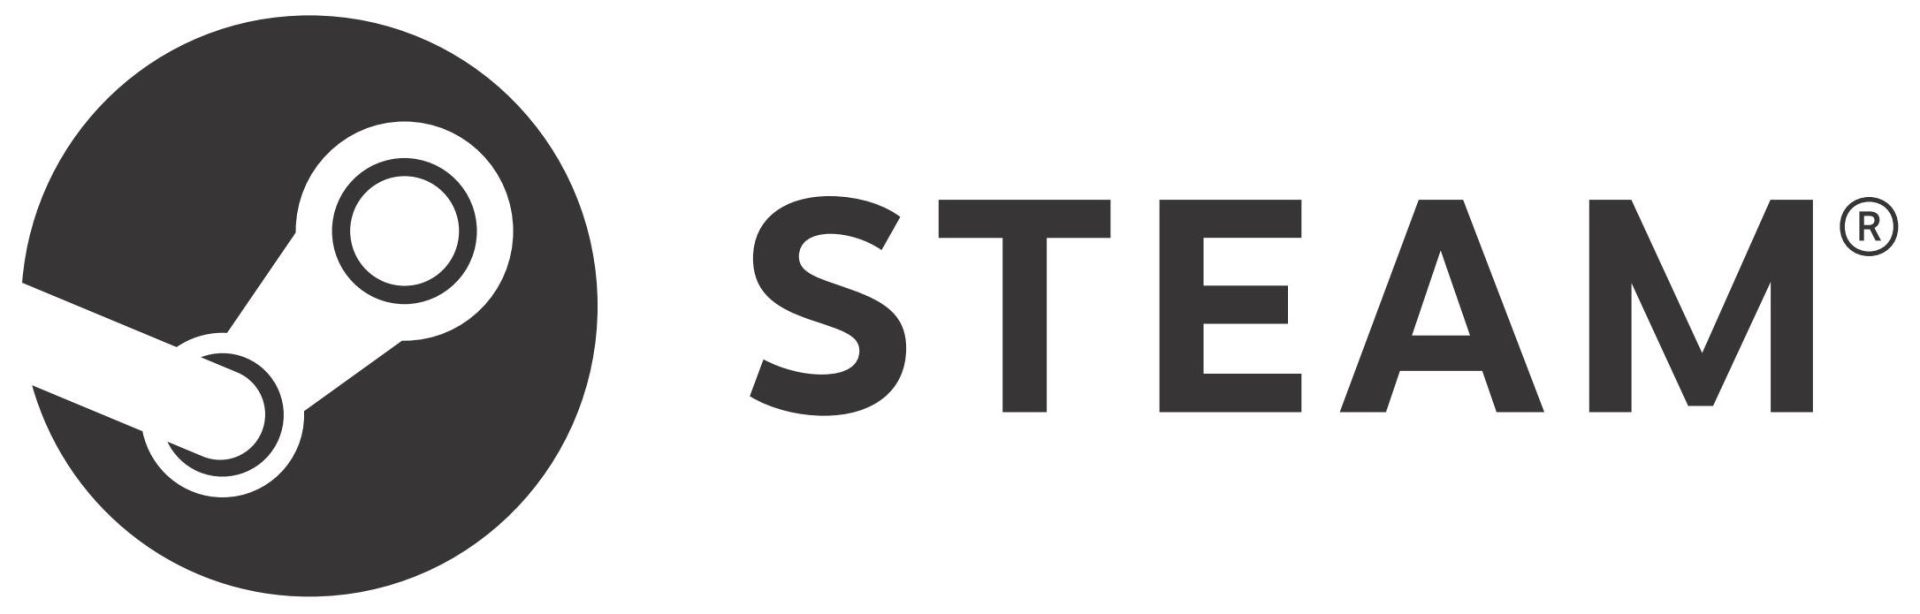 steam logo in gray